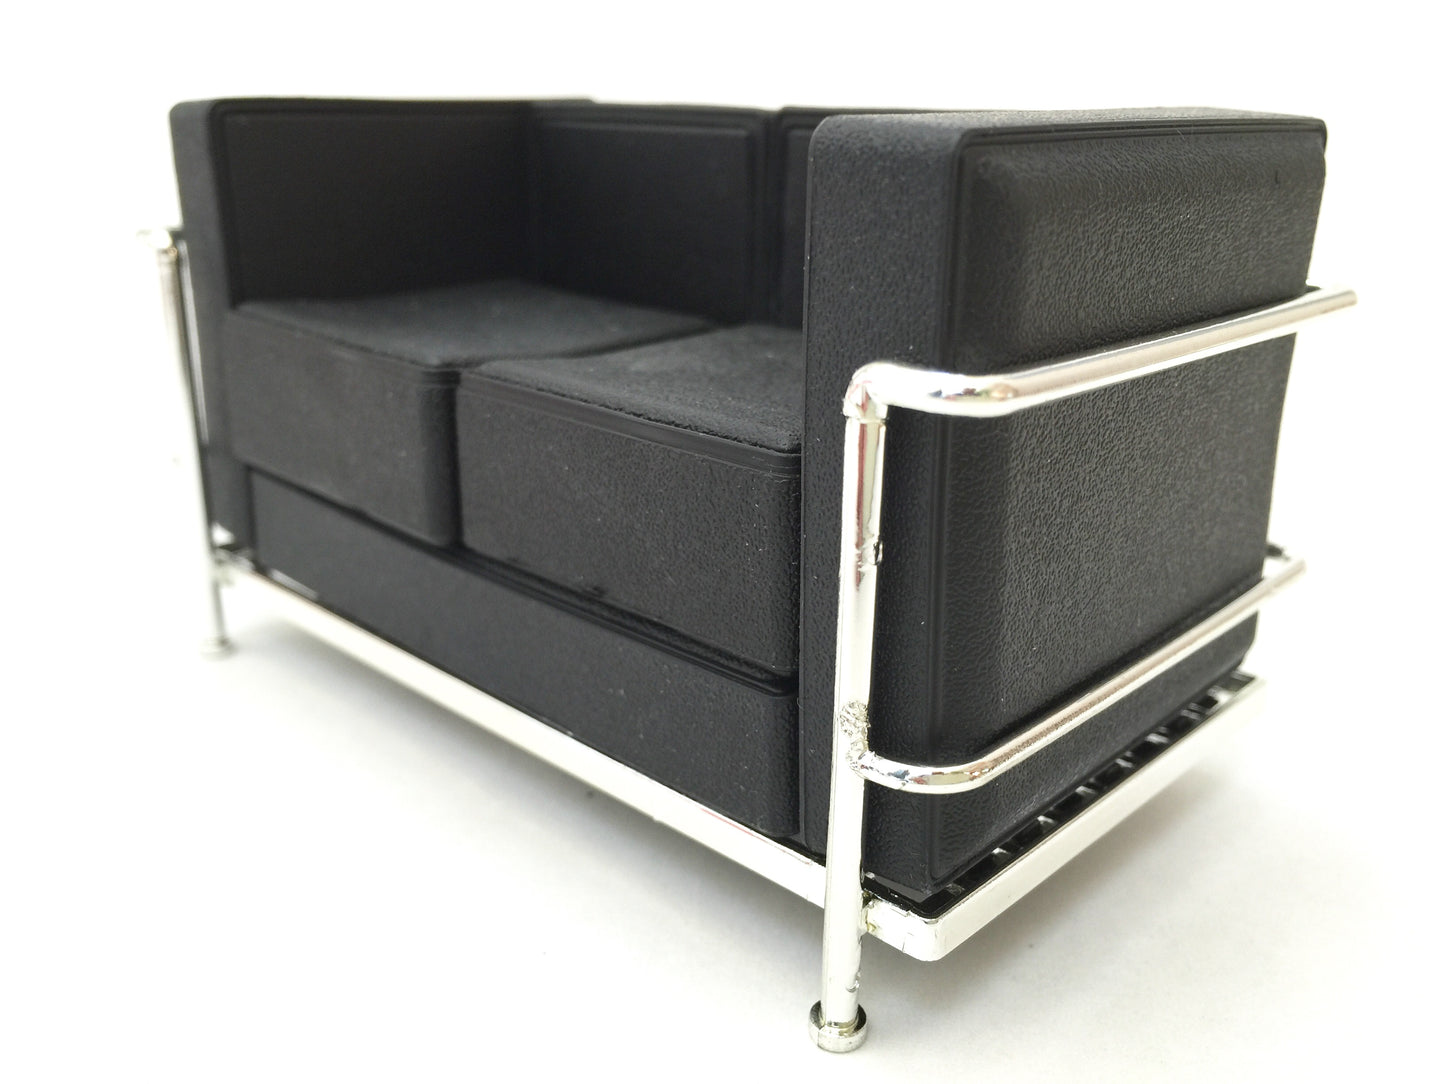 75126 LC2 Le Corbusier Loveseat-Black-1 sofa